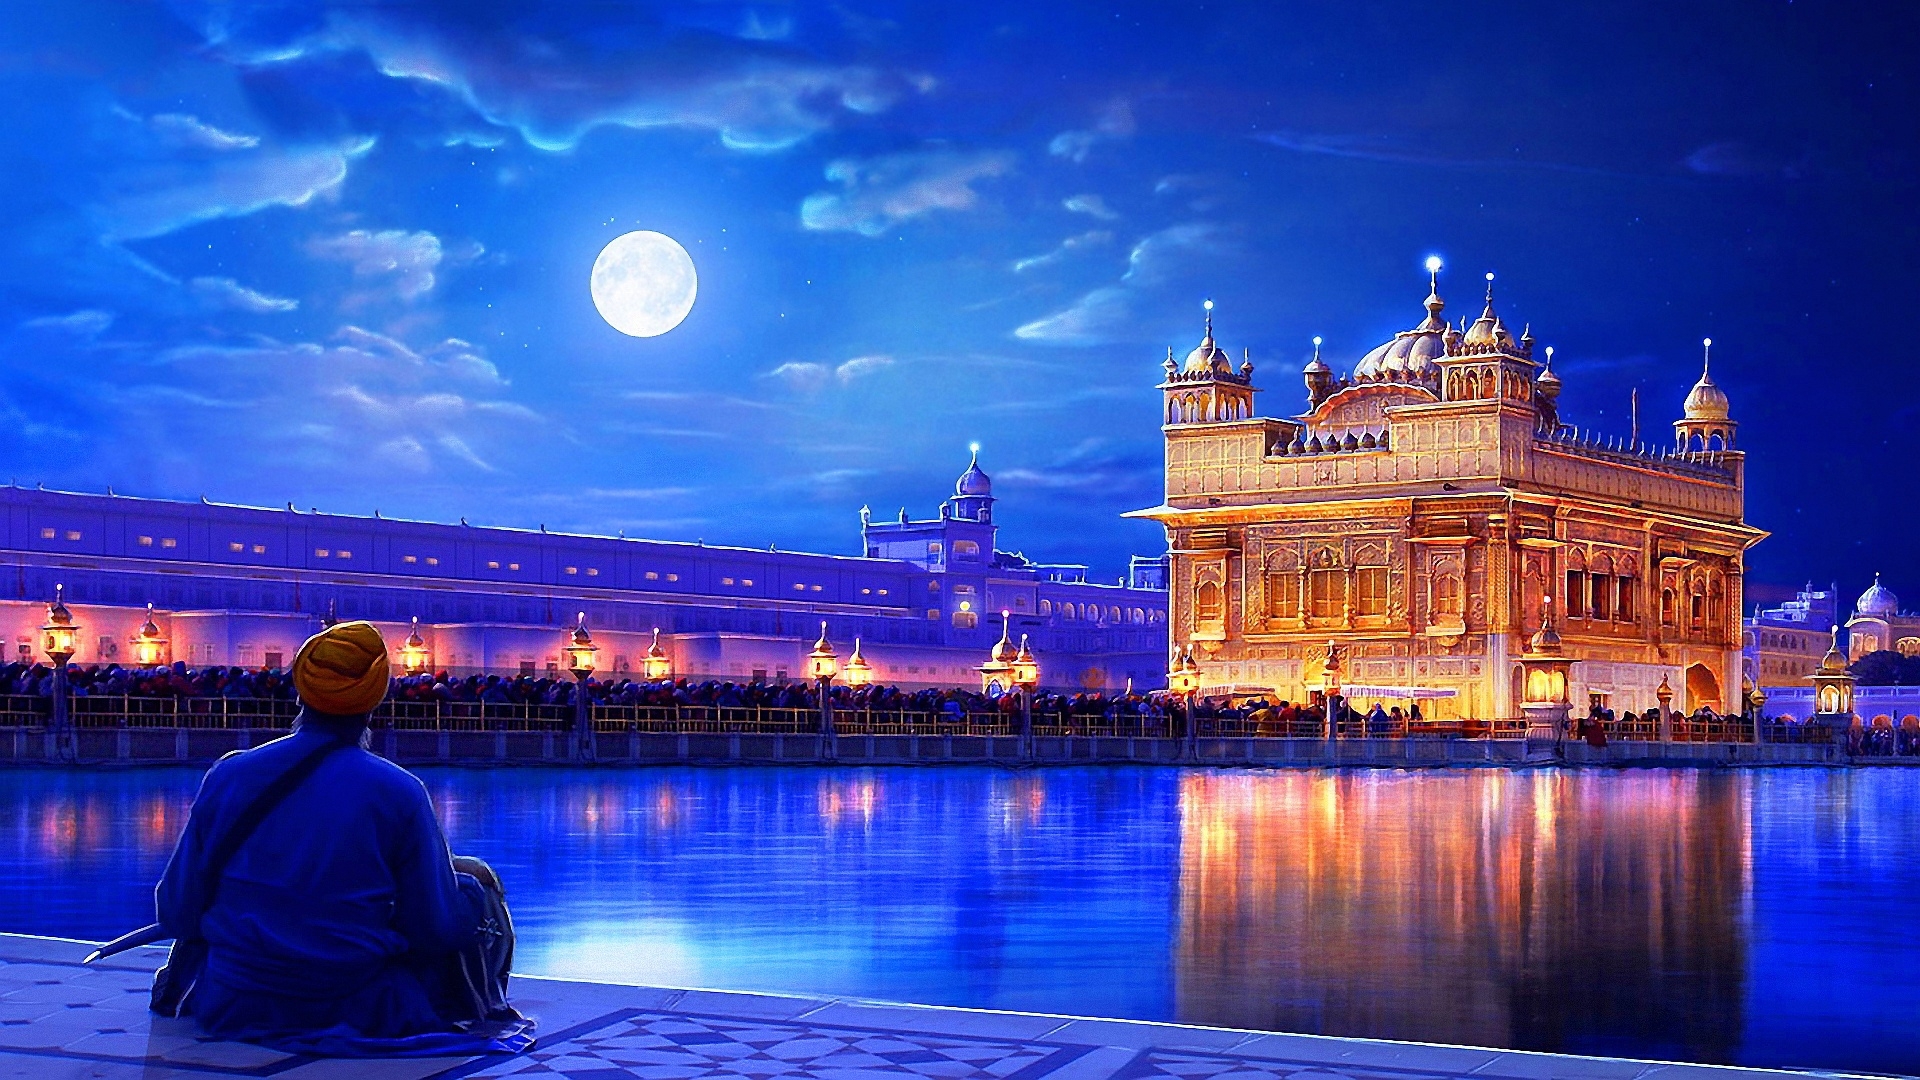 Golden Temple Amritsar India for 1920 x 1080 HDTV 1080p resolution